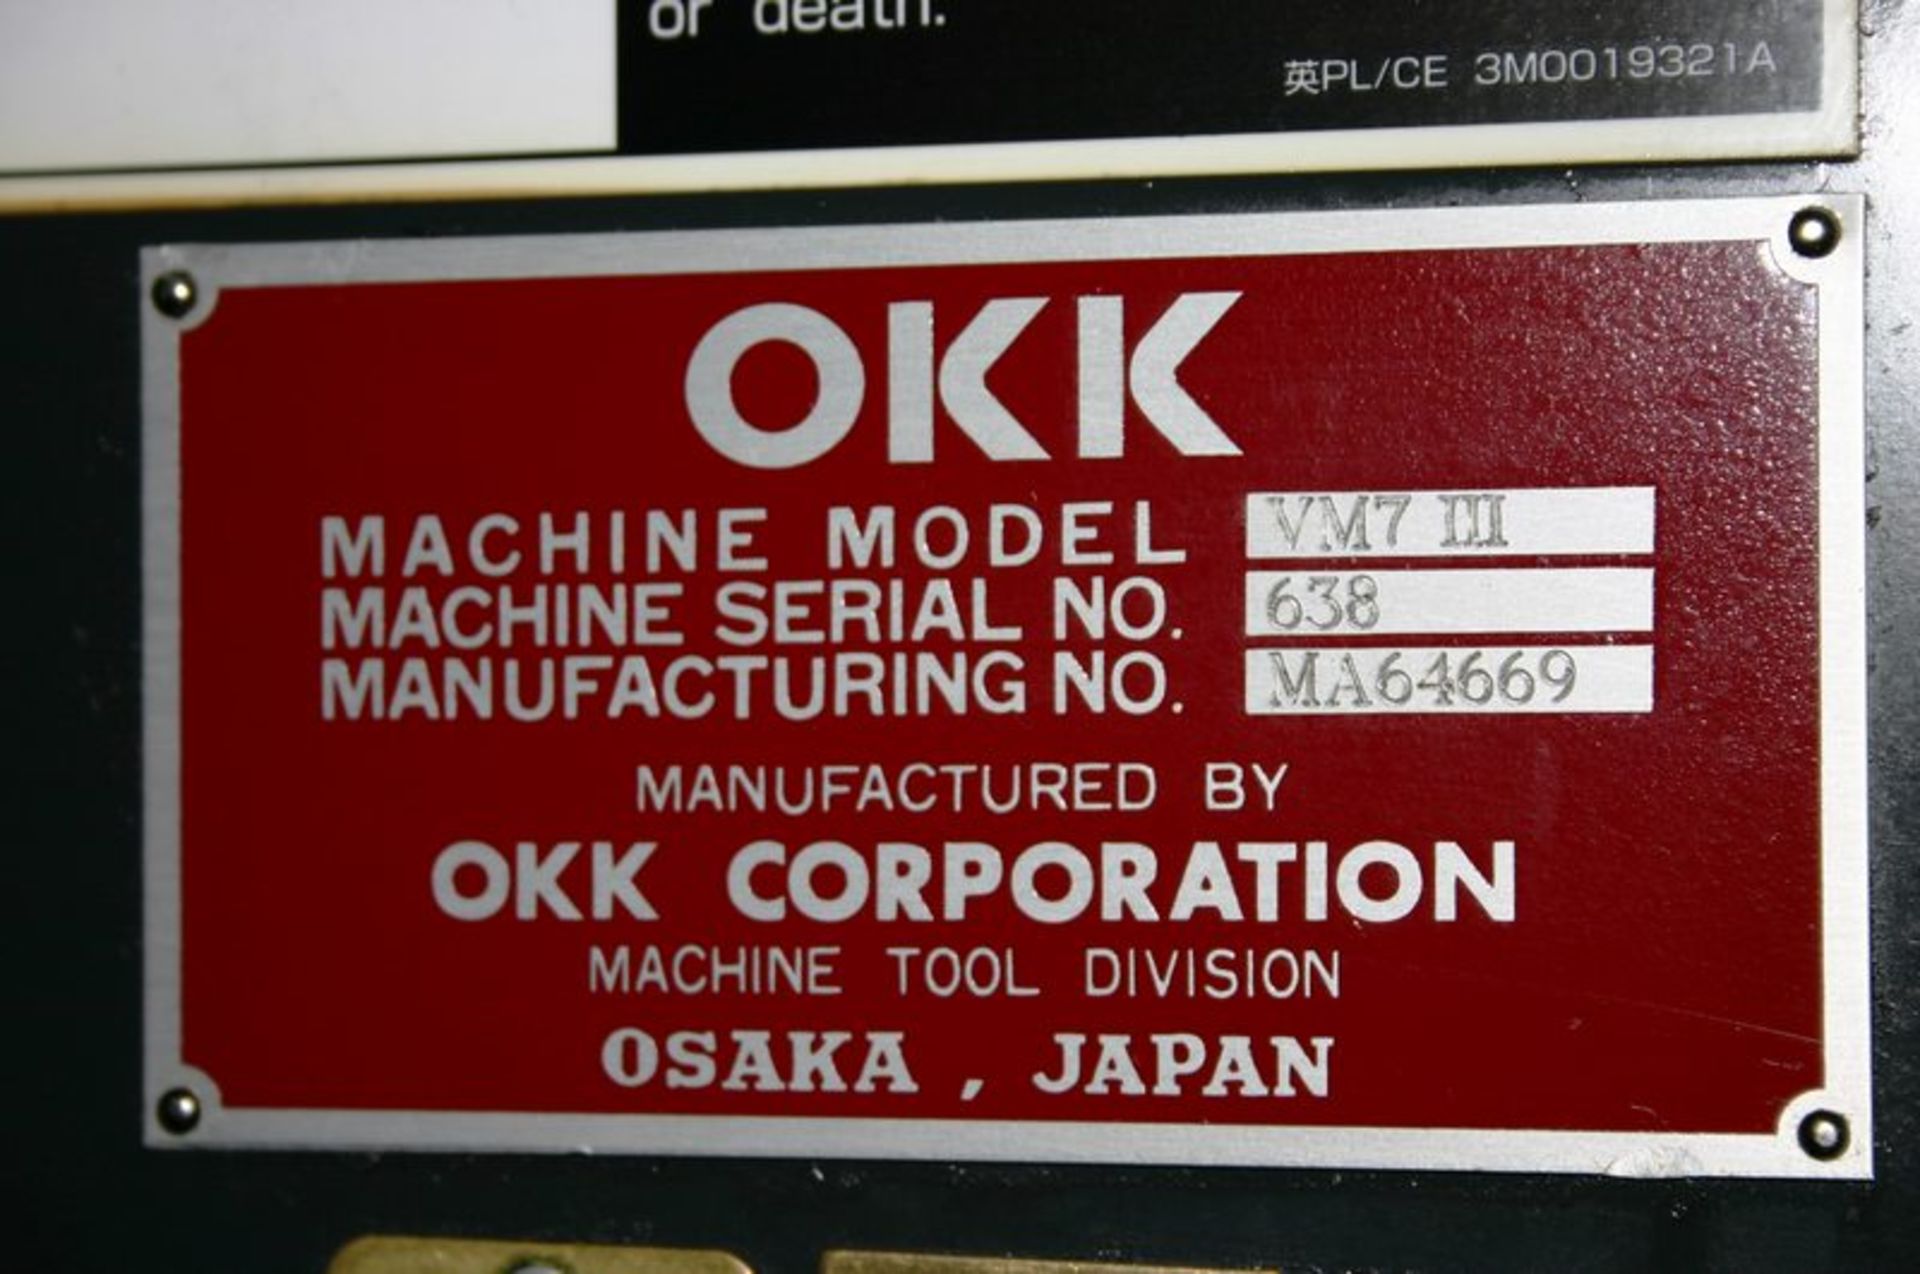 OKK Model VM7-III CNC 3-Axis 50 Taper Vertical Machining Center, S/N 638, New 2004 - Image 7 of 7